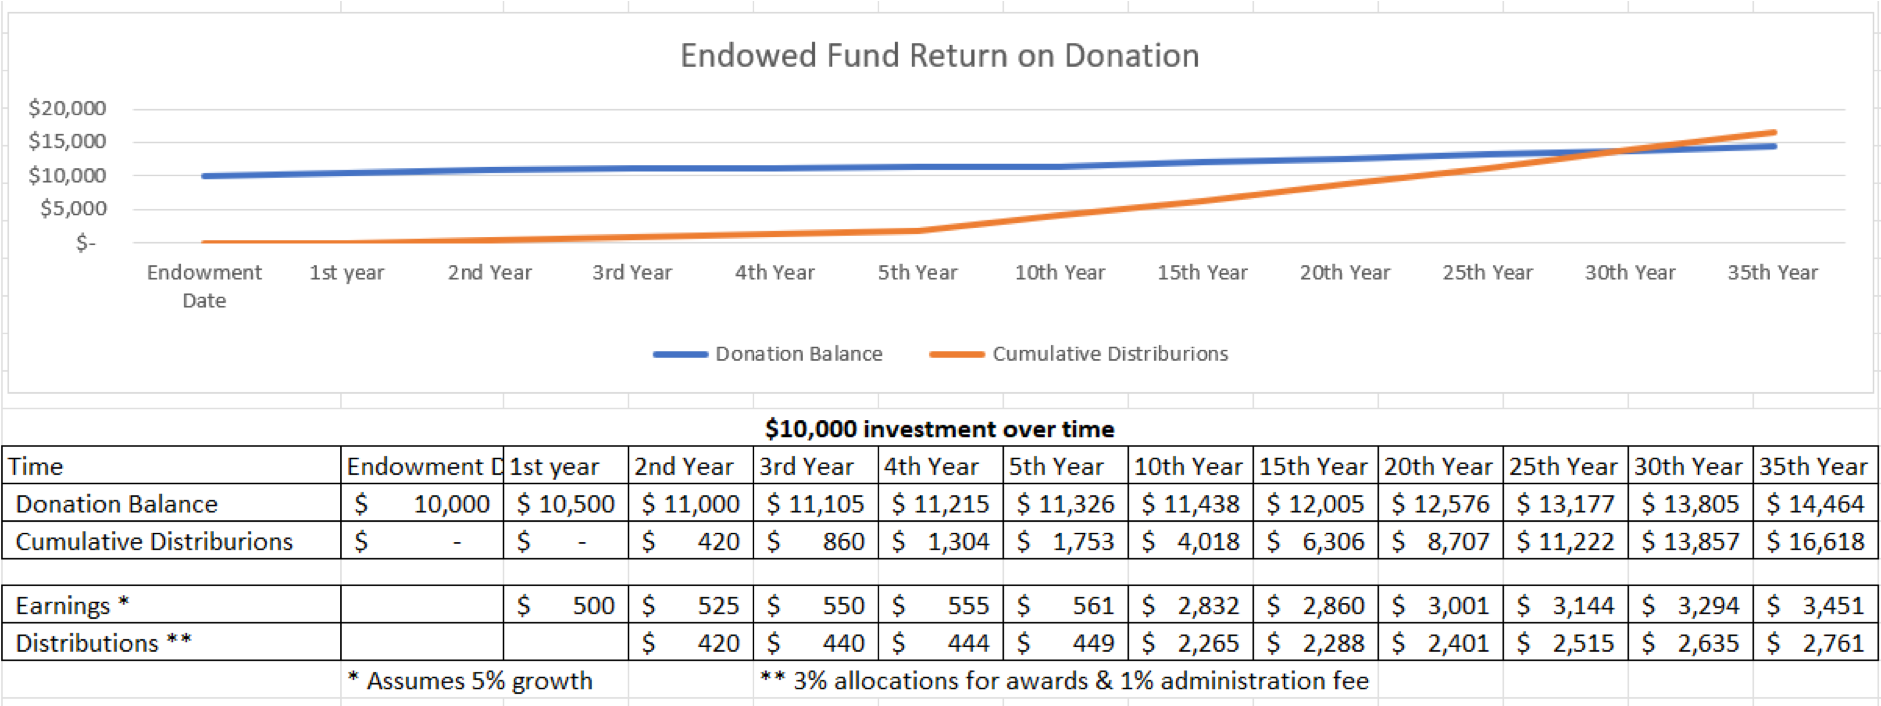 Endowed Fund Return on Donation